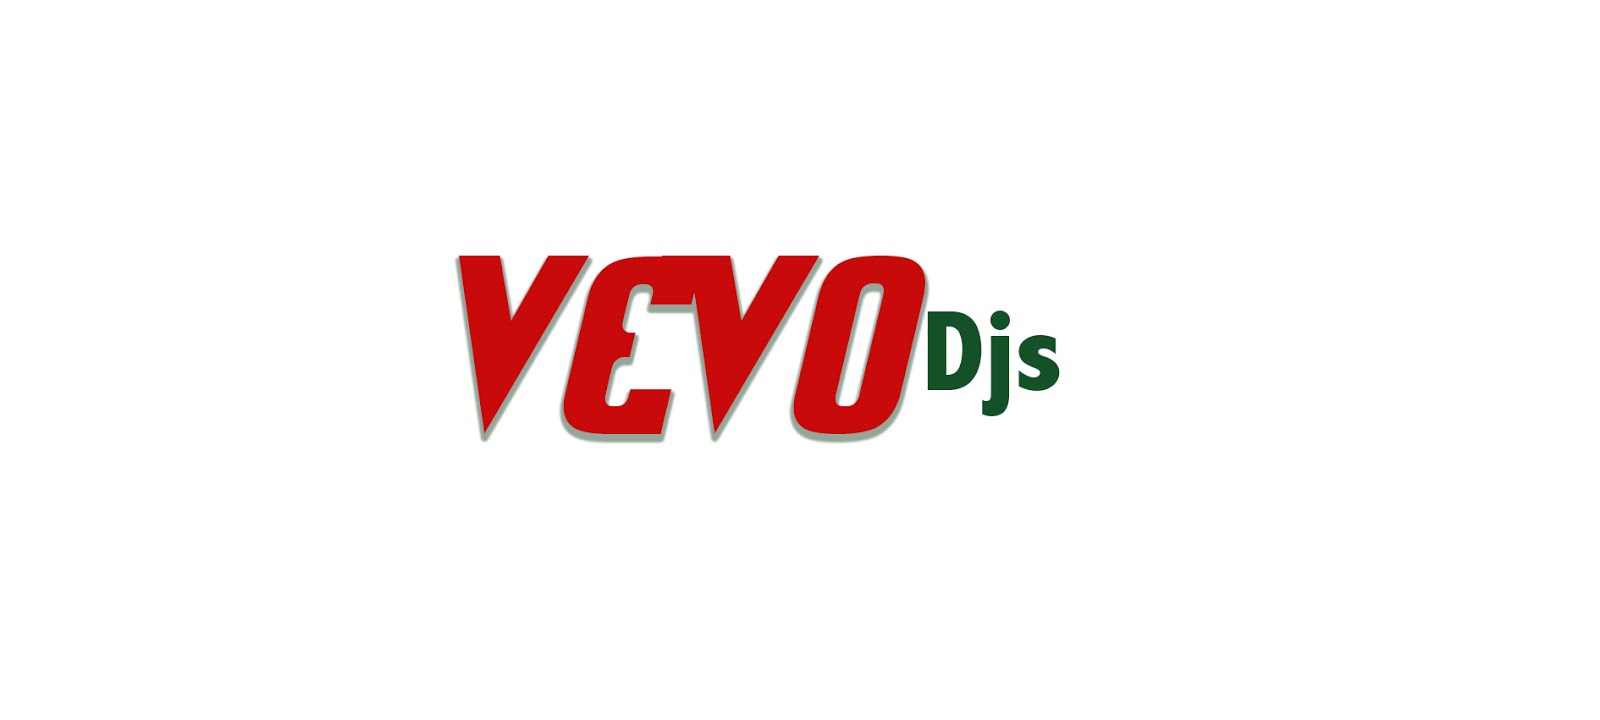 VEVO DJS